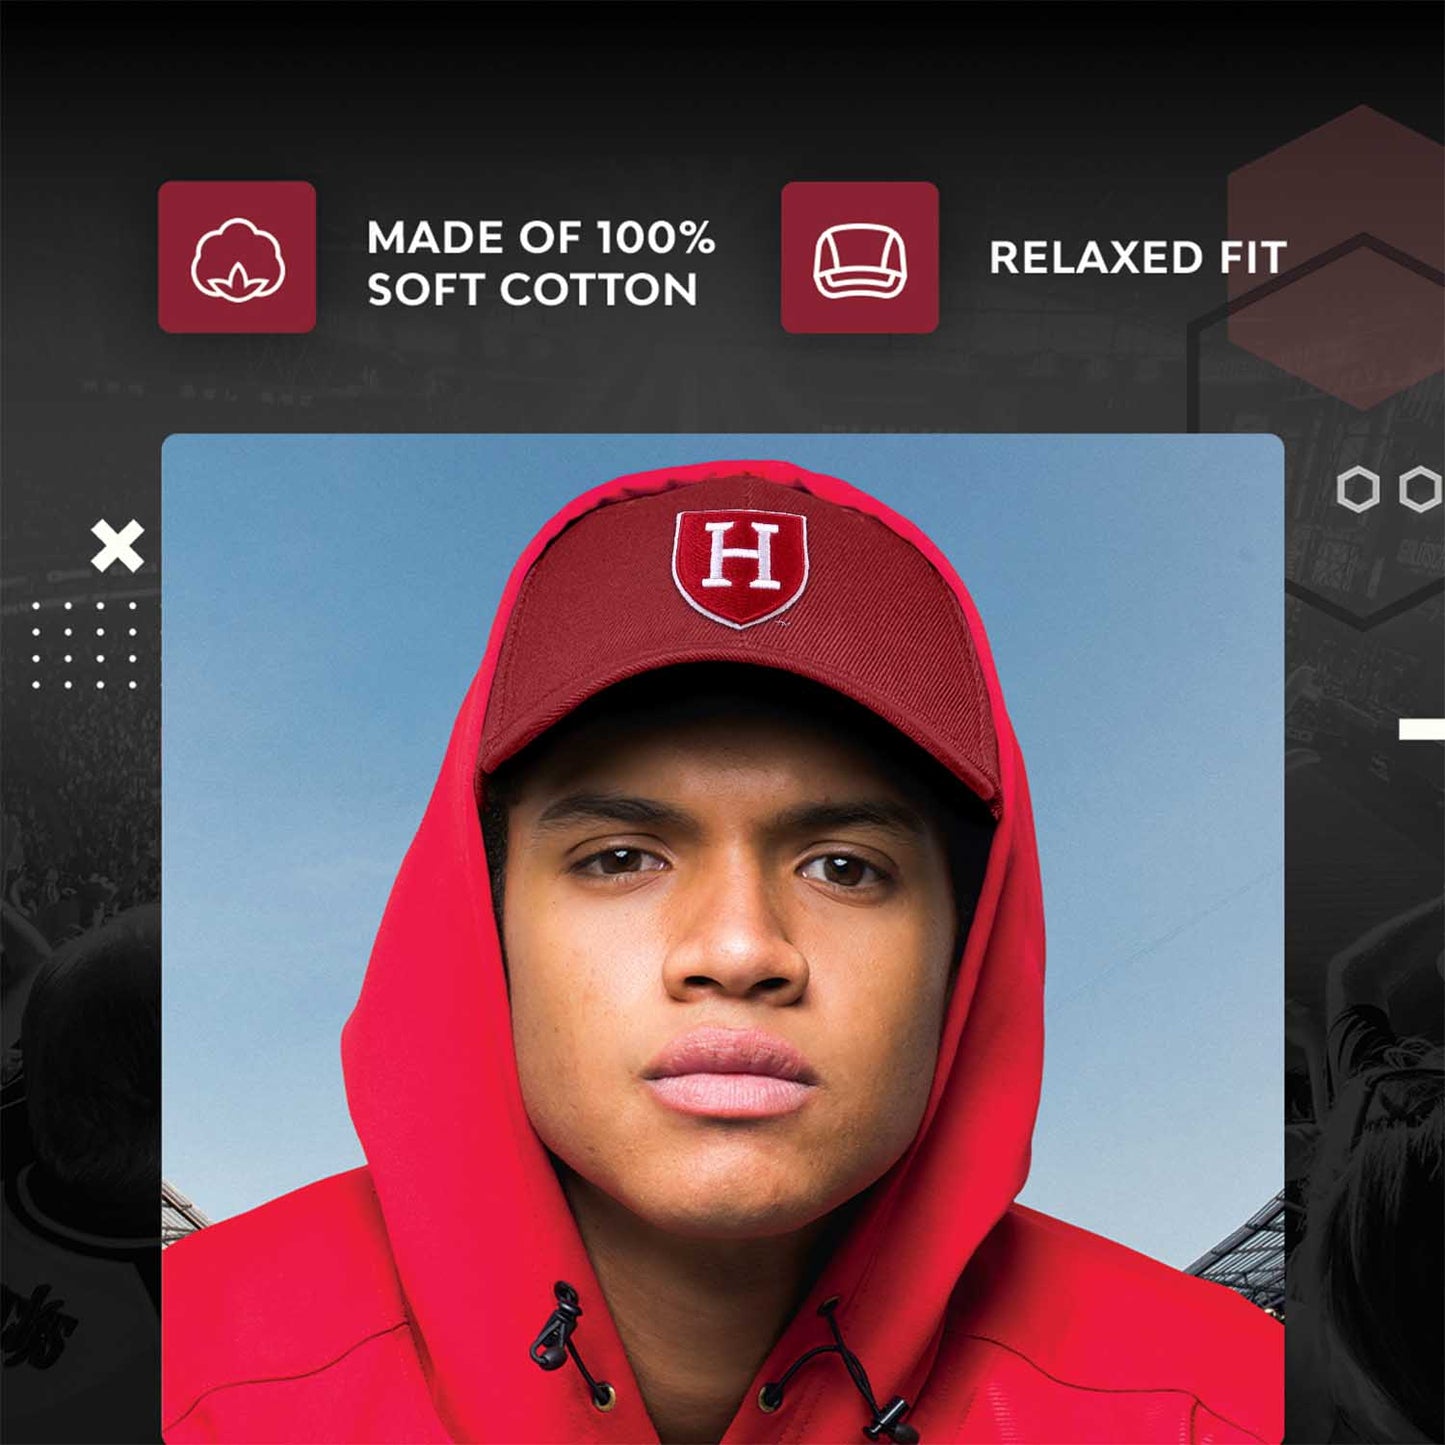 Harvard Crimson NCAA Adult Relaxed Fit Logo Hat - Cardinal